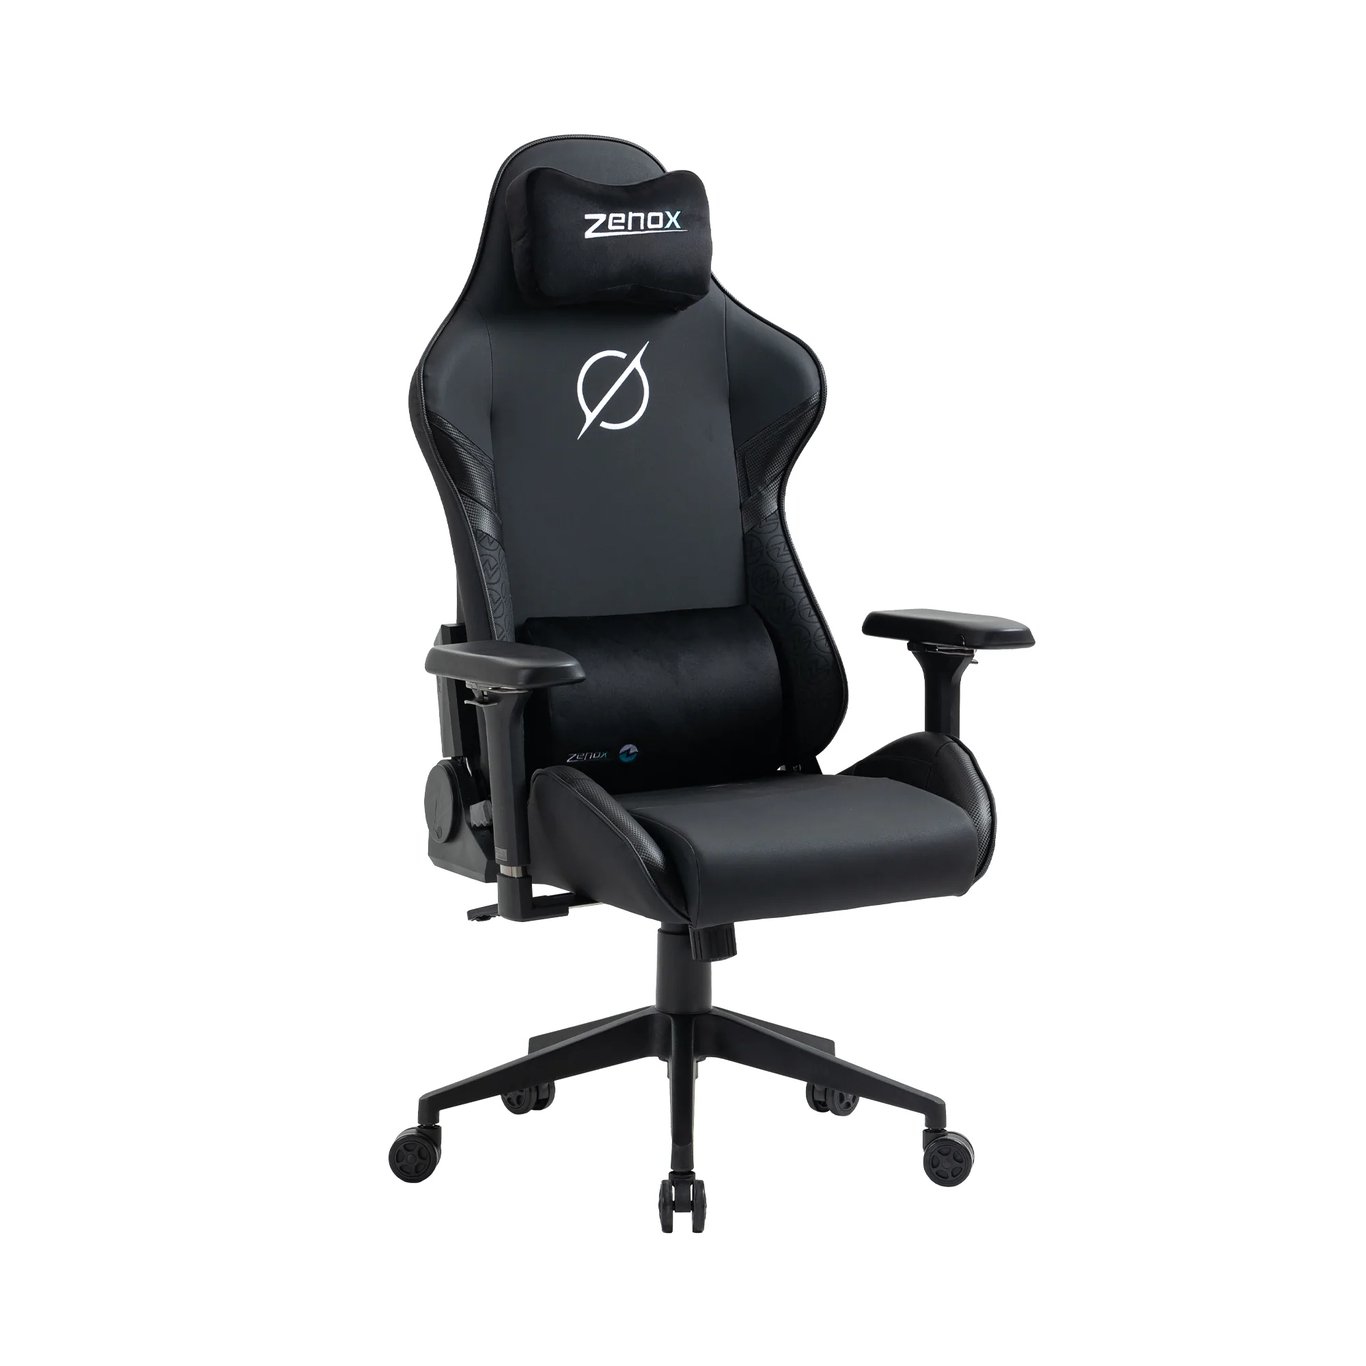 Zenox Saturn-MK2 Racing Chair 電競椅 - Leather/Carbon 皮面/碳黑